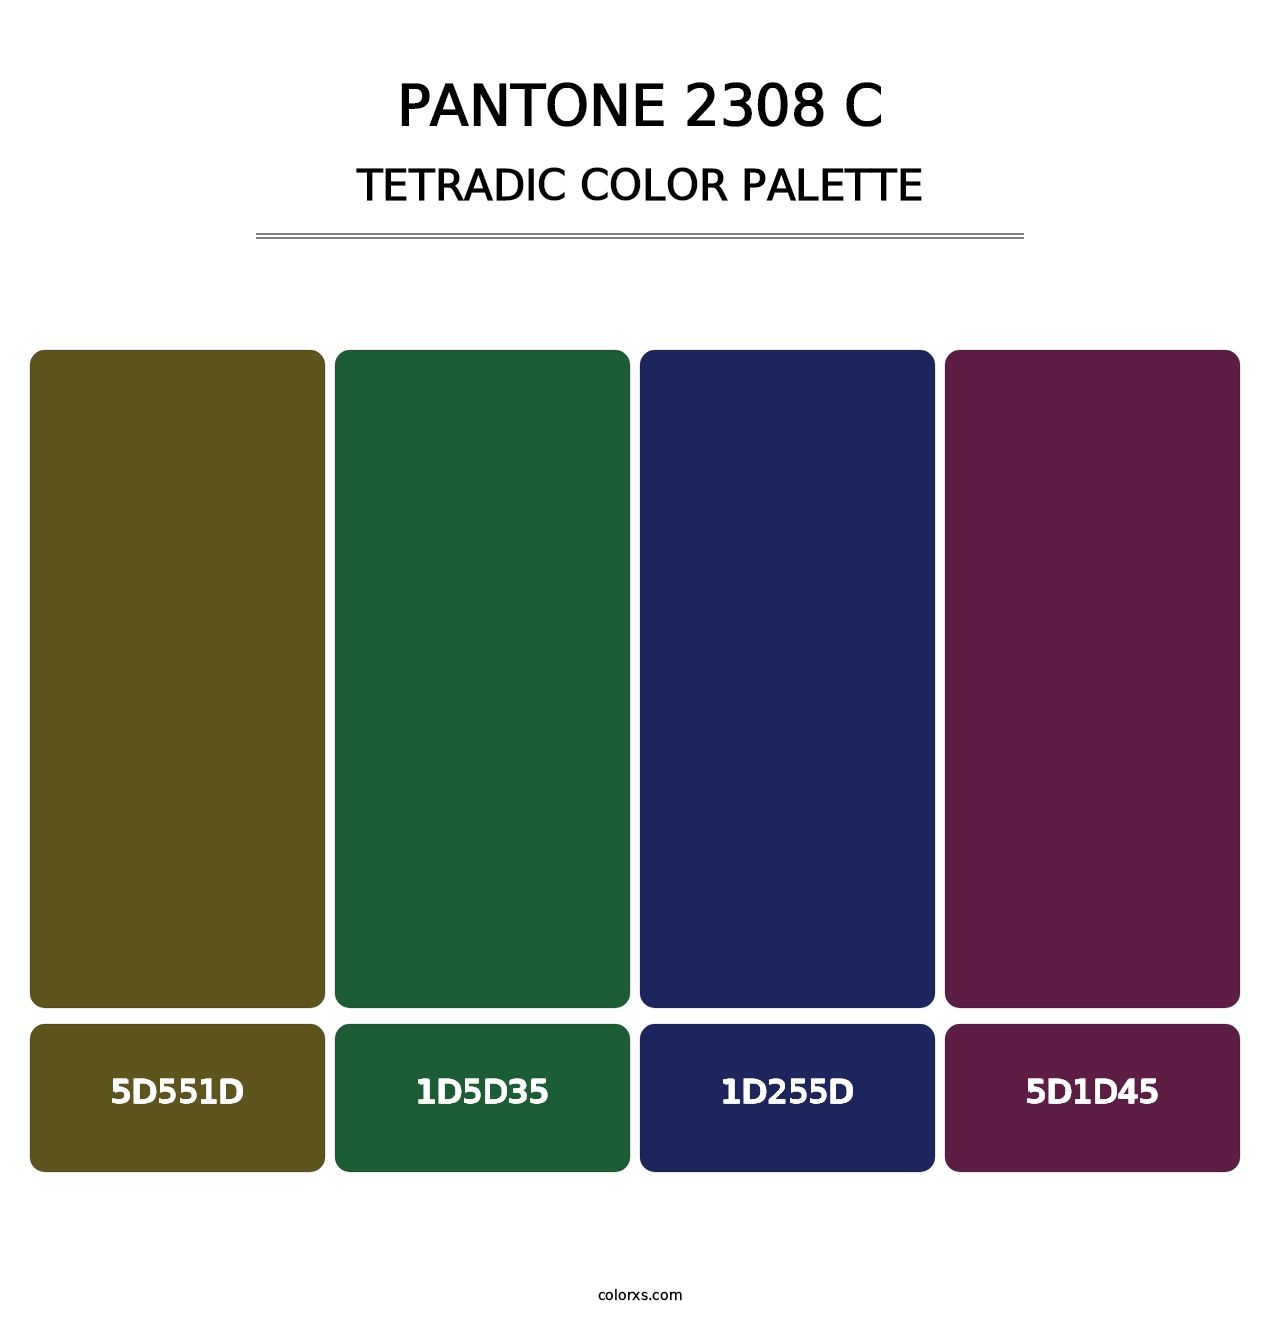 PANTONE 2308 C - Tetradic Color Palette